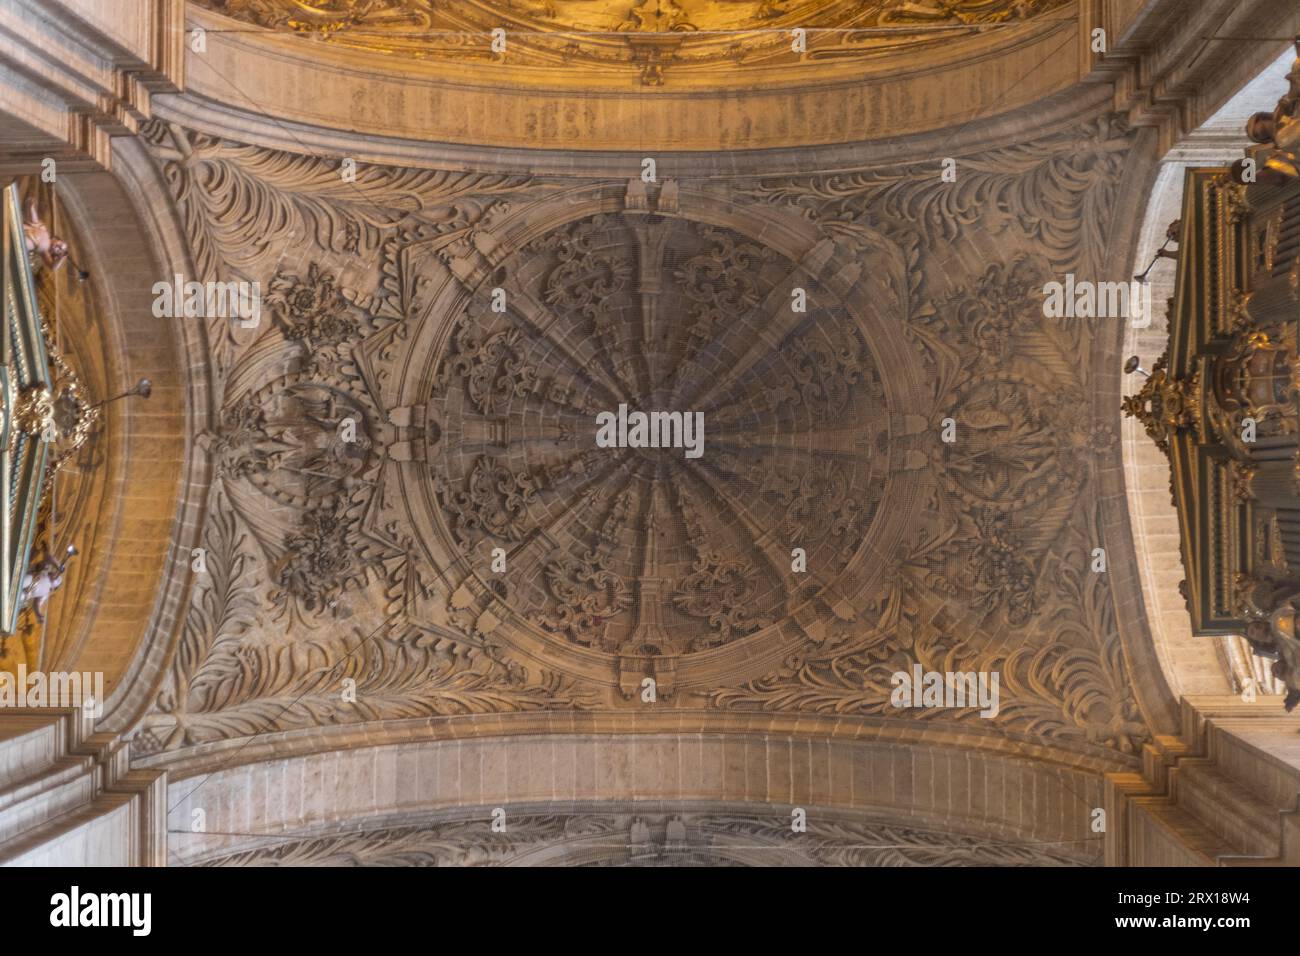 Inside of the Catedral de Malaga.  Interiors, altars and decorations of the Malaga La Manquita Cathedral. Malaga, Spain Stock Photo